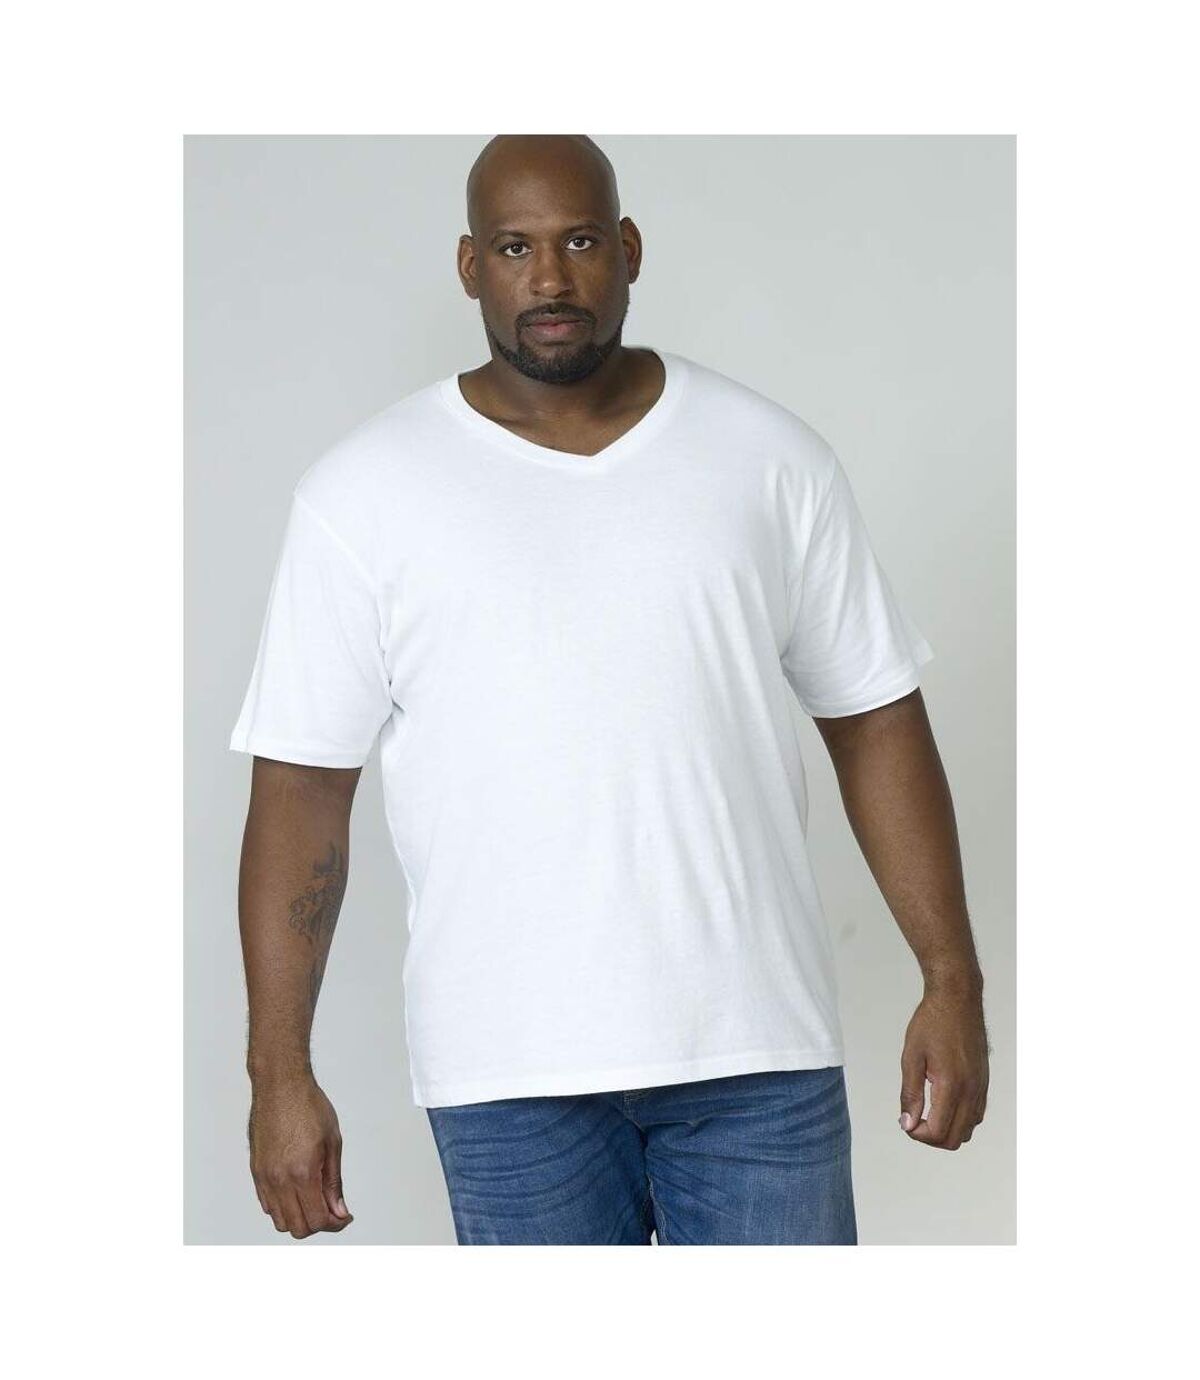 Duke D555 Kingsize Signature - T-shirt en coton - Homme (Blanc) - UTDC144